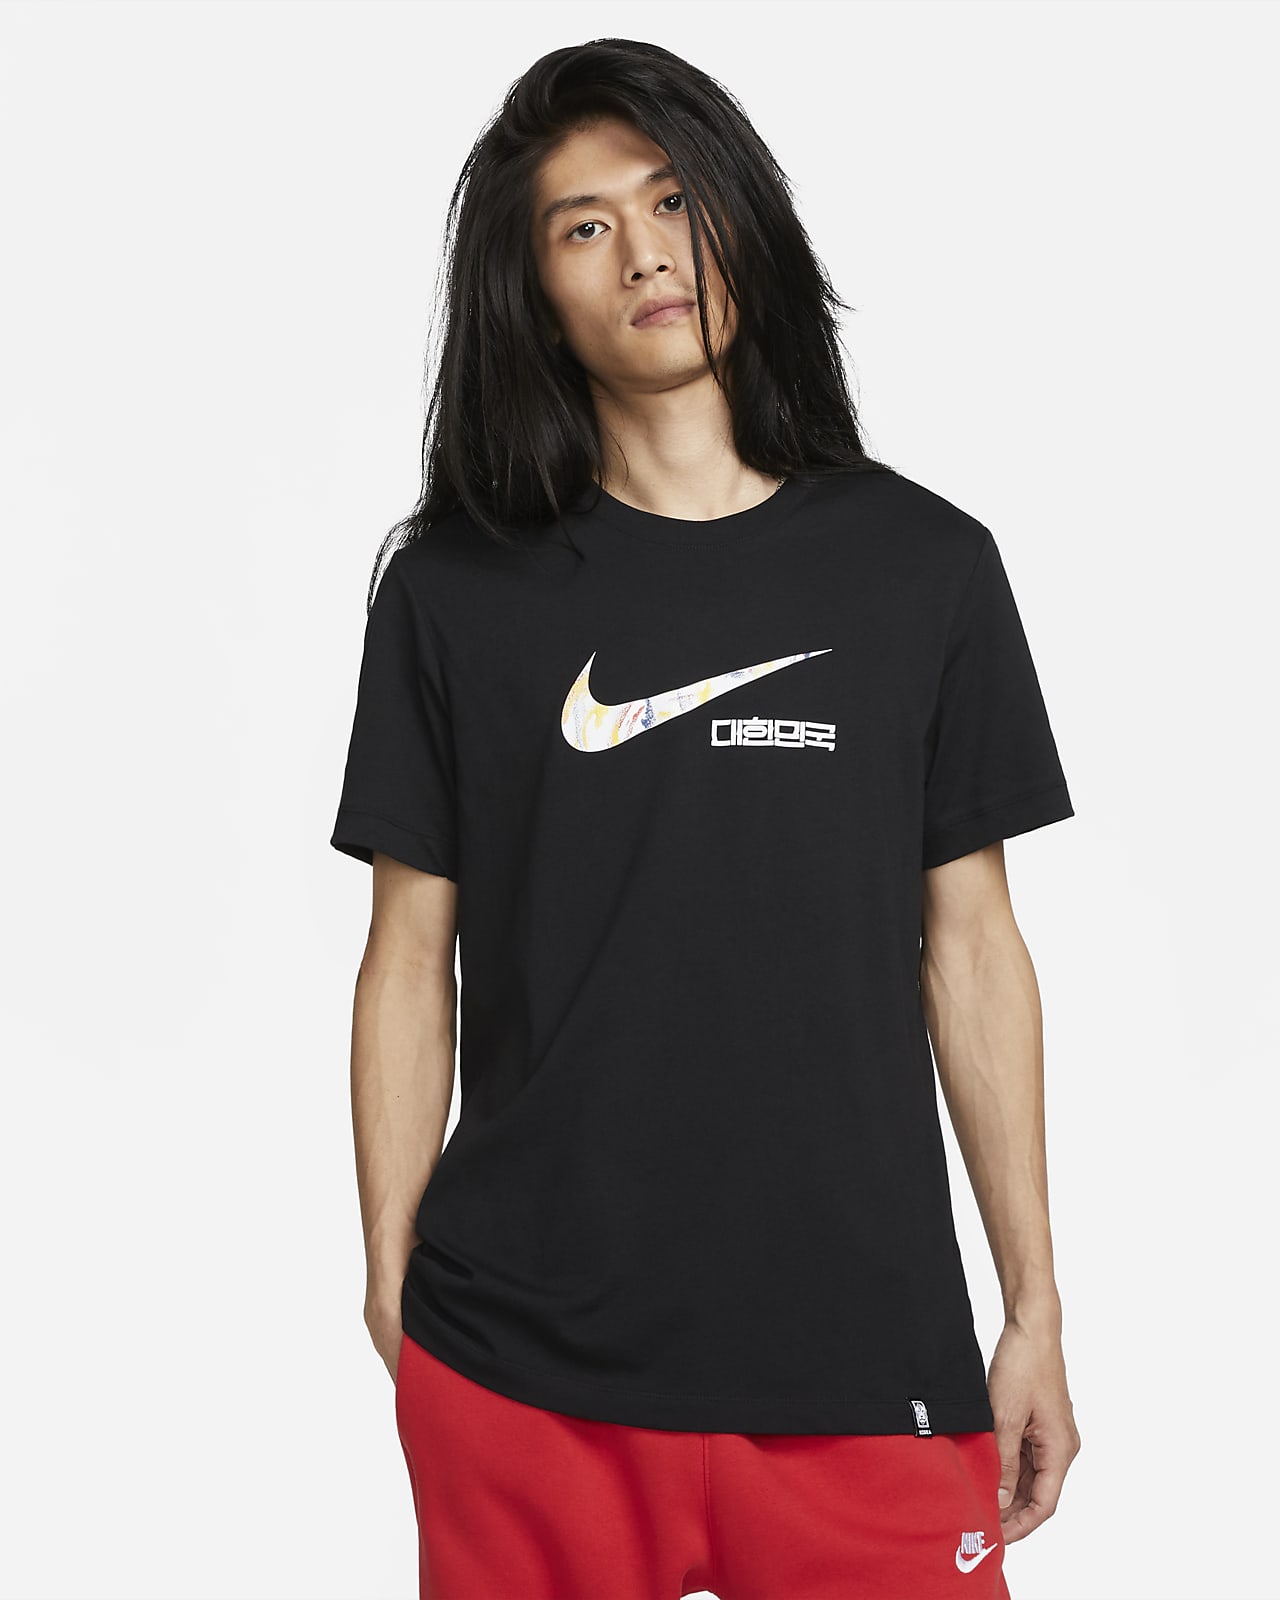 Corea Camiseta Nike - Hombre. ES